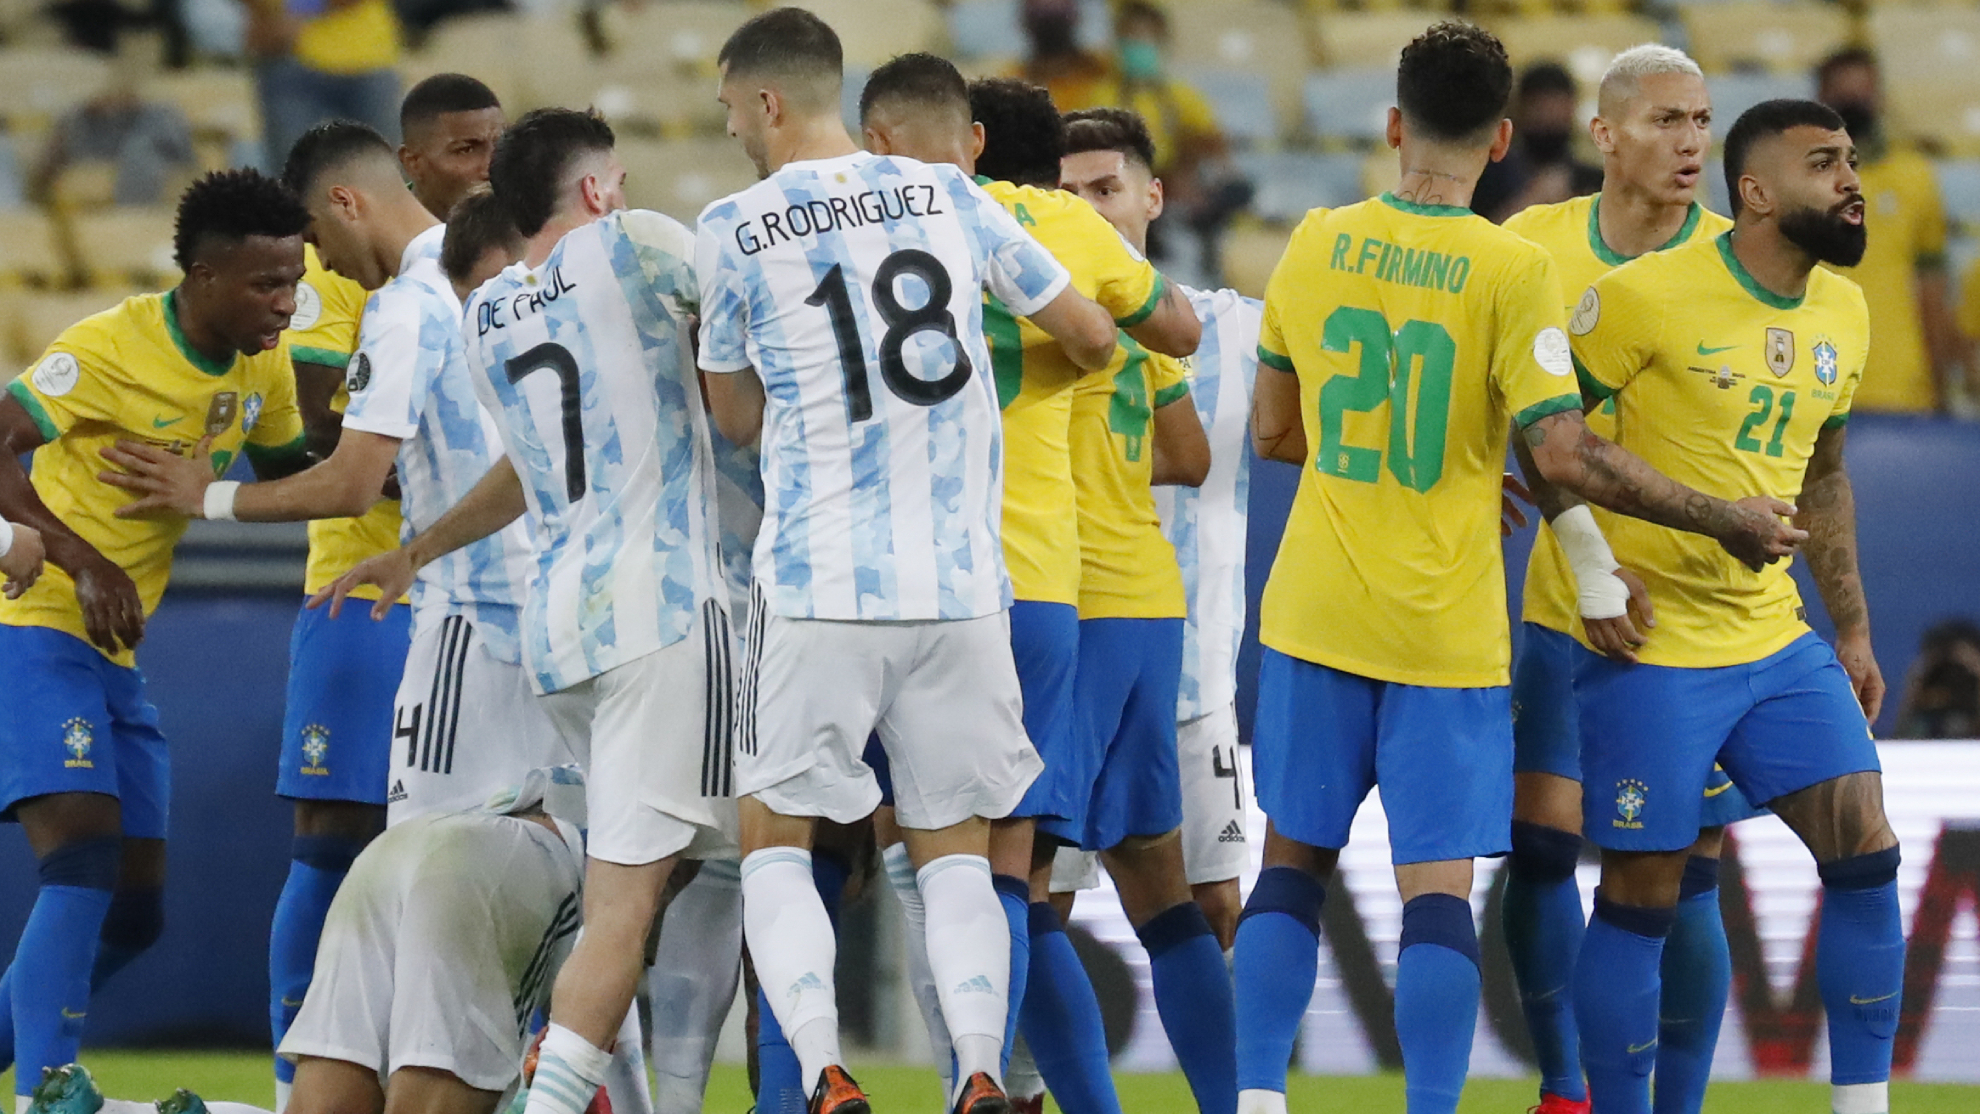 Argentina - Copa Amrica - Campen - Messi - Di Mara - Maracan - Guido Rodrguez - Ttulo - Betis - Ftbol